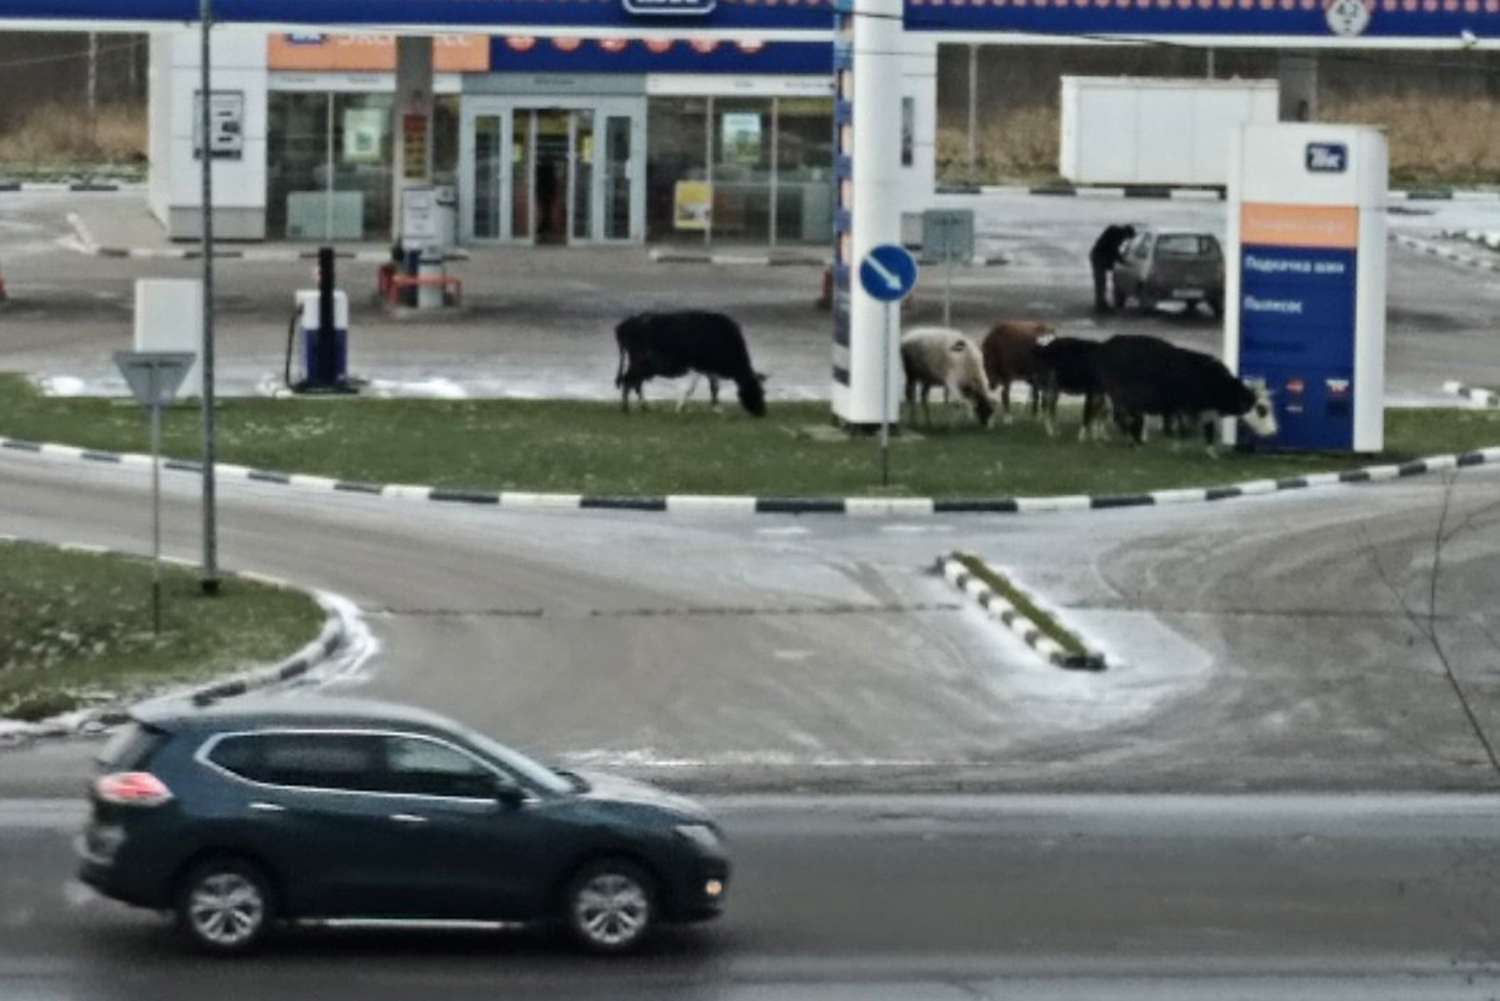 Лось на заправке. Молоко на заправке. Корова на заправке. Заправка молоко есть. Коровы на заправке в Дагестане.